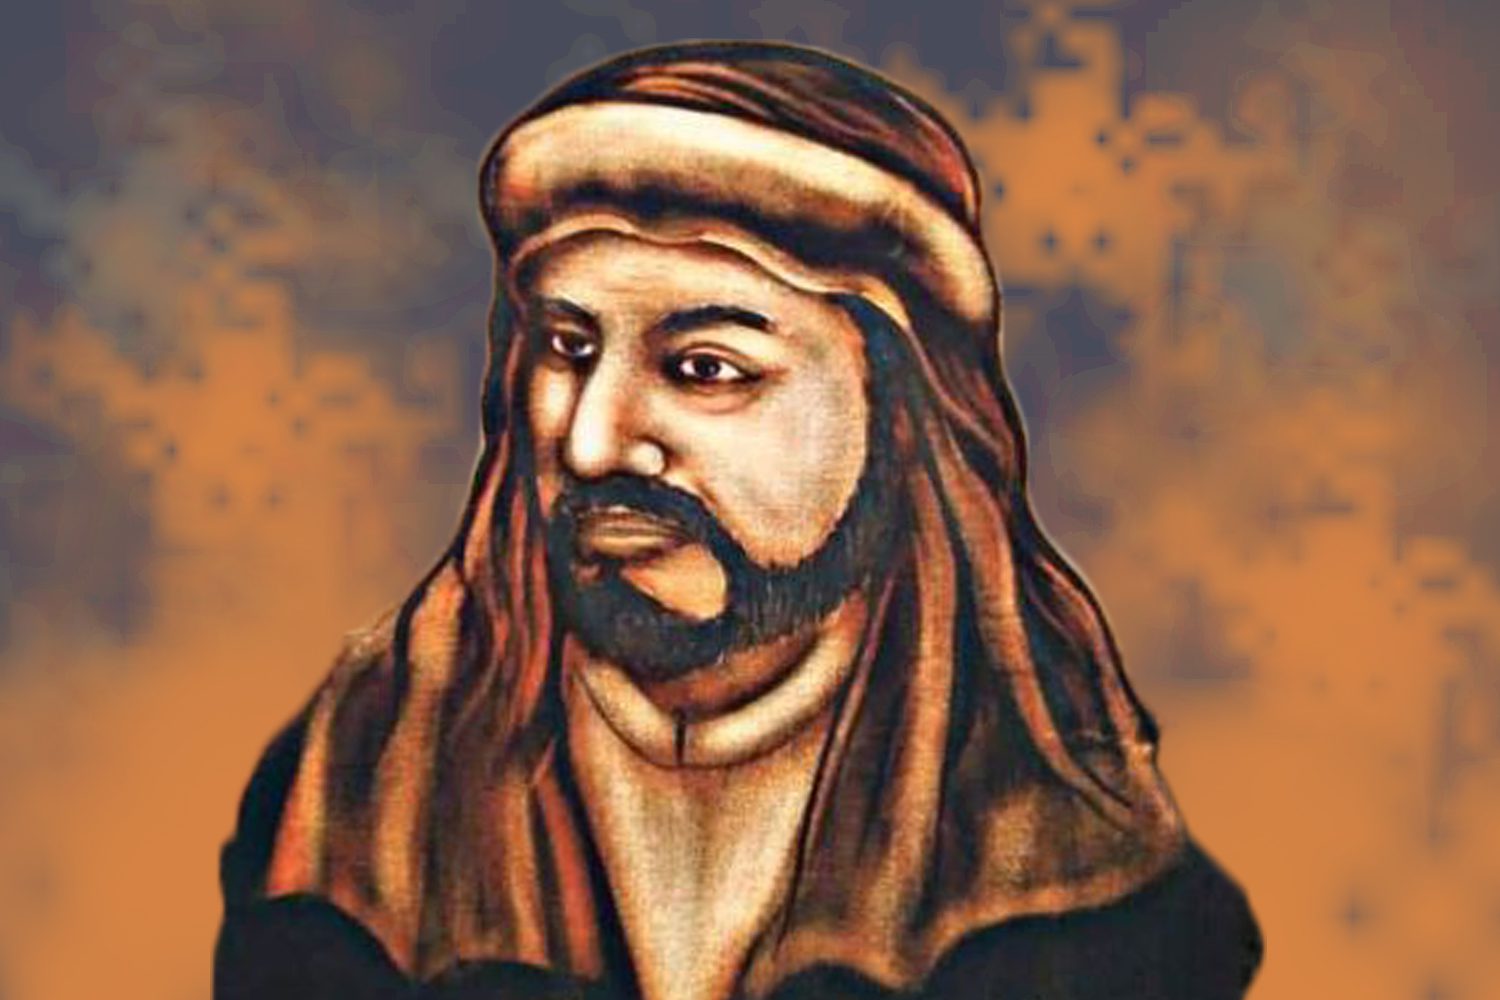 Riwayat Hidup Umar bin Khattab 585 M, Tokoh Dibalik Layar Kesuksesan Islam